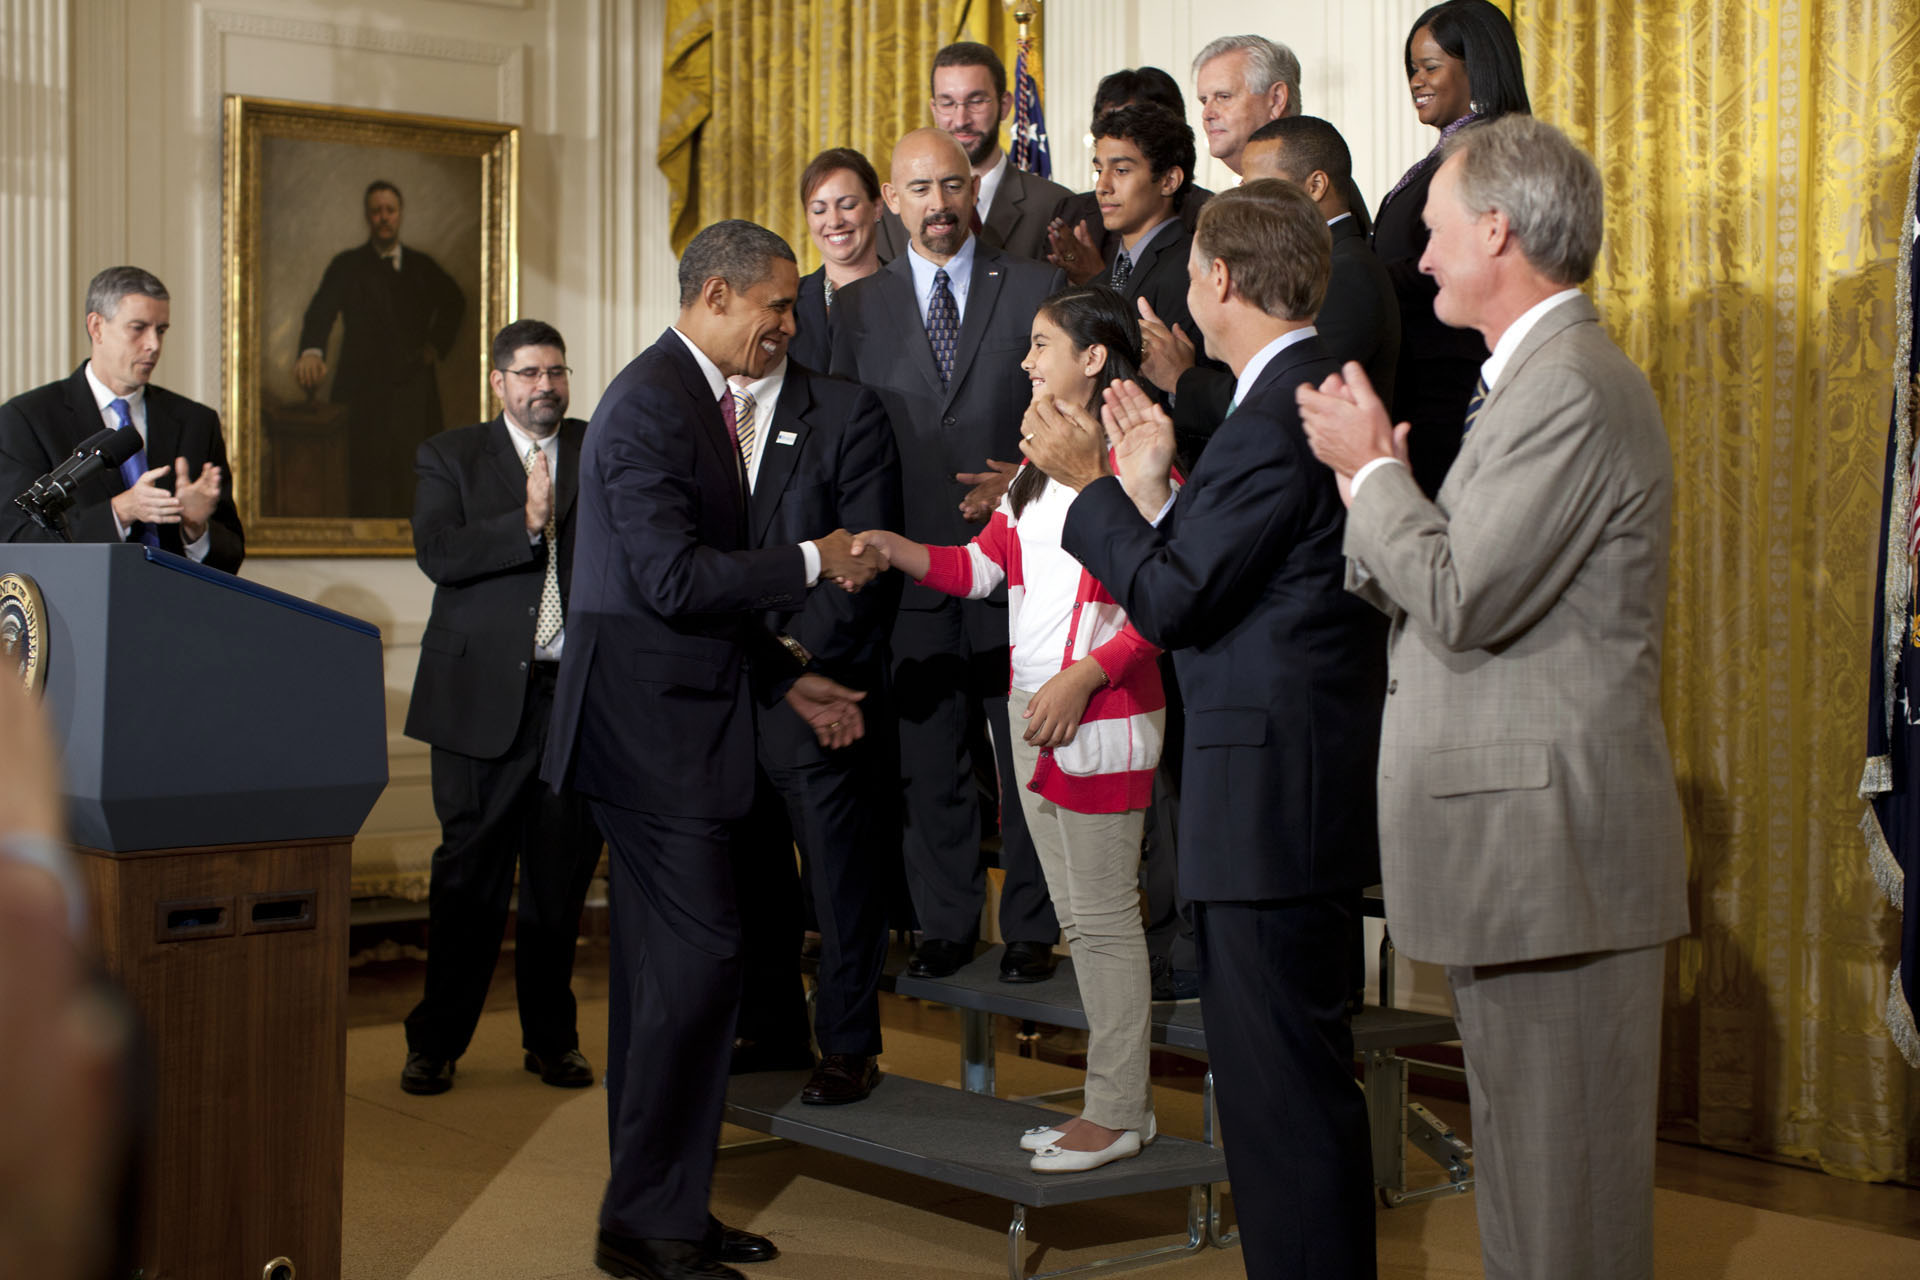 The President Greets Keiry Herrera, a sixth grade student at Graham Road Elementary School